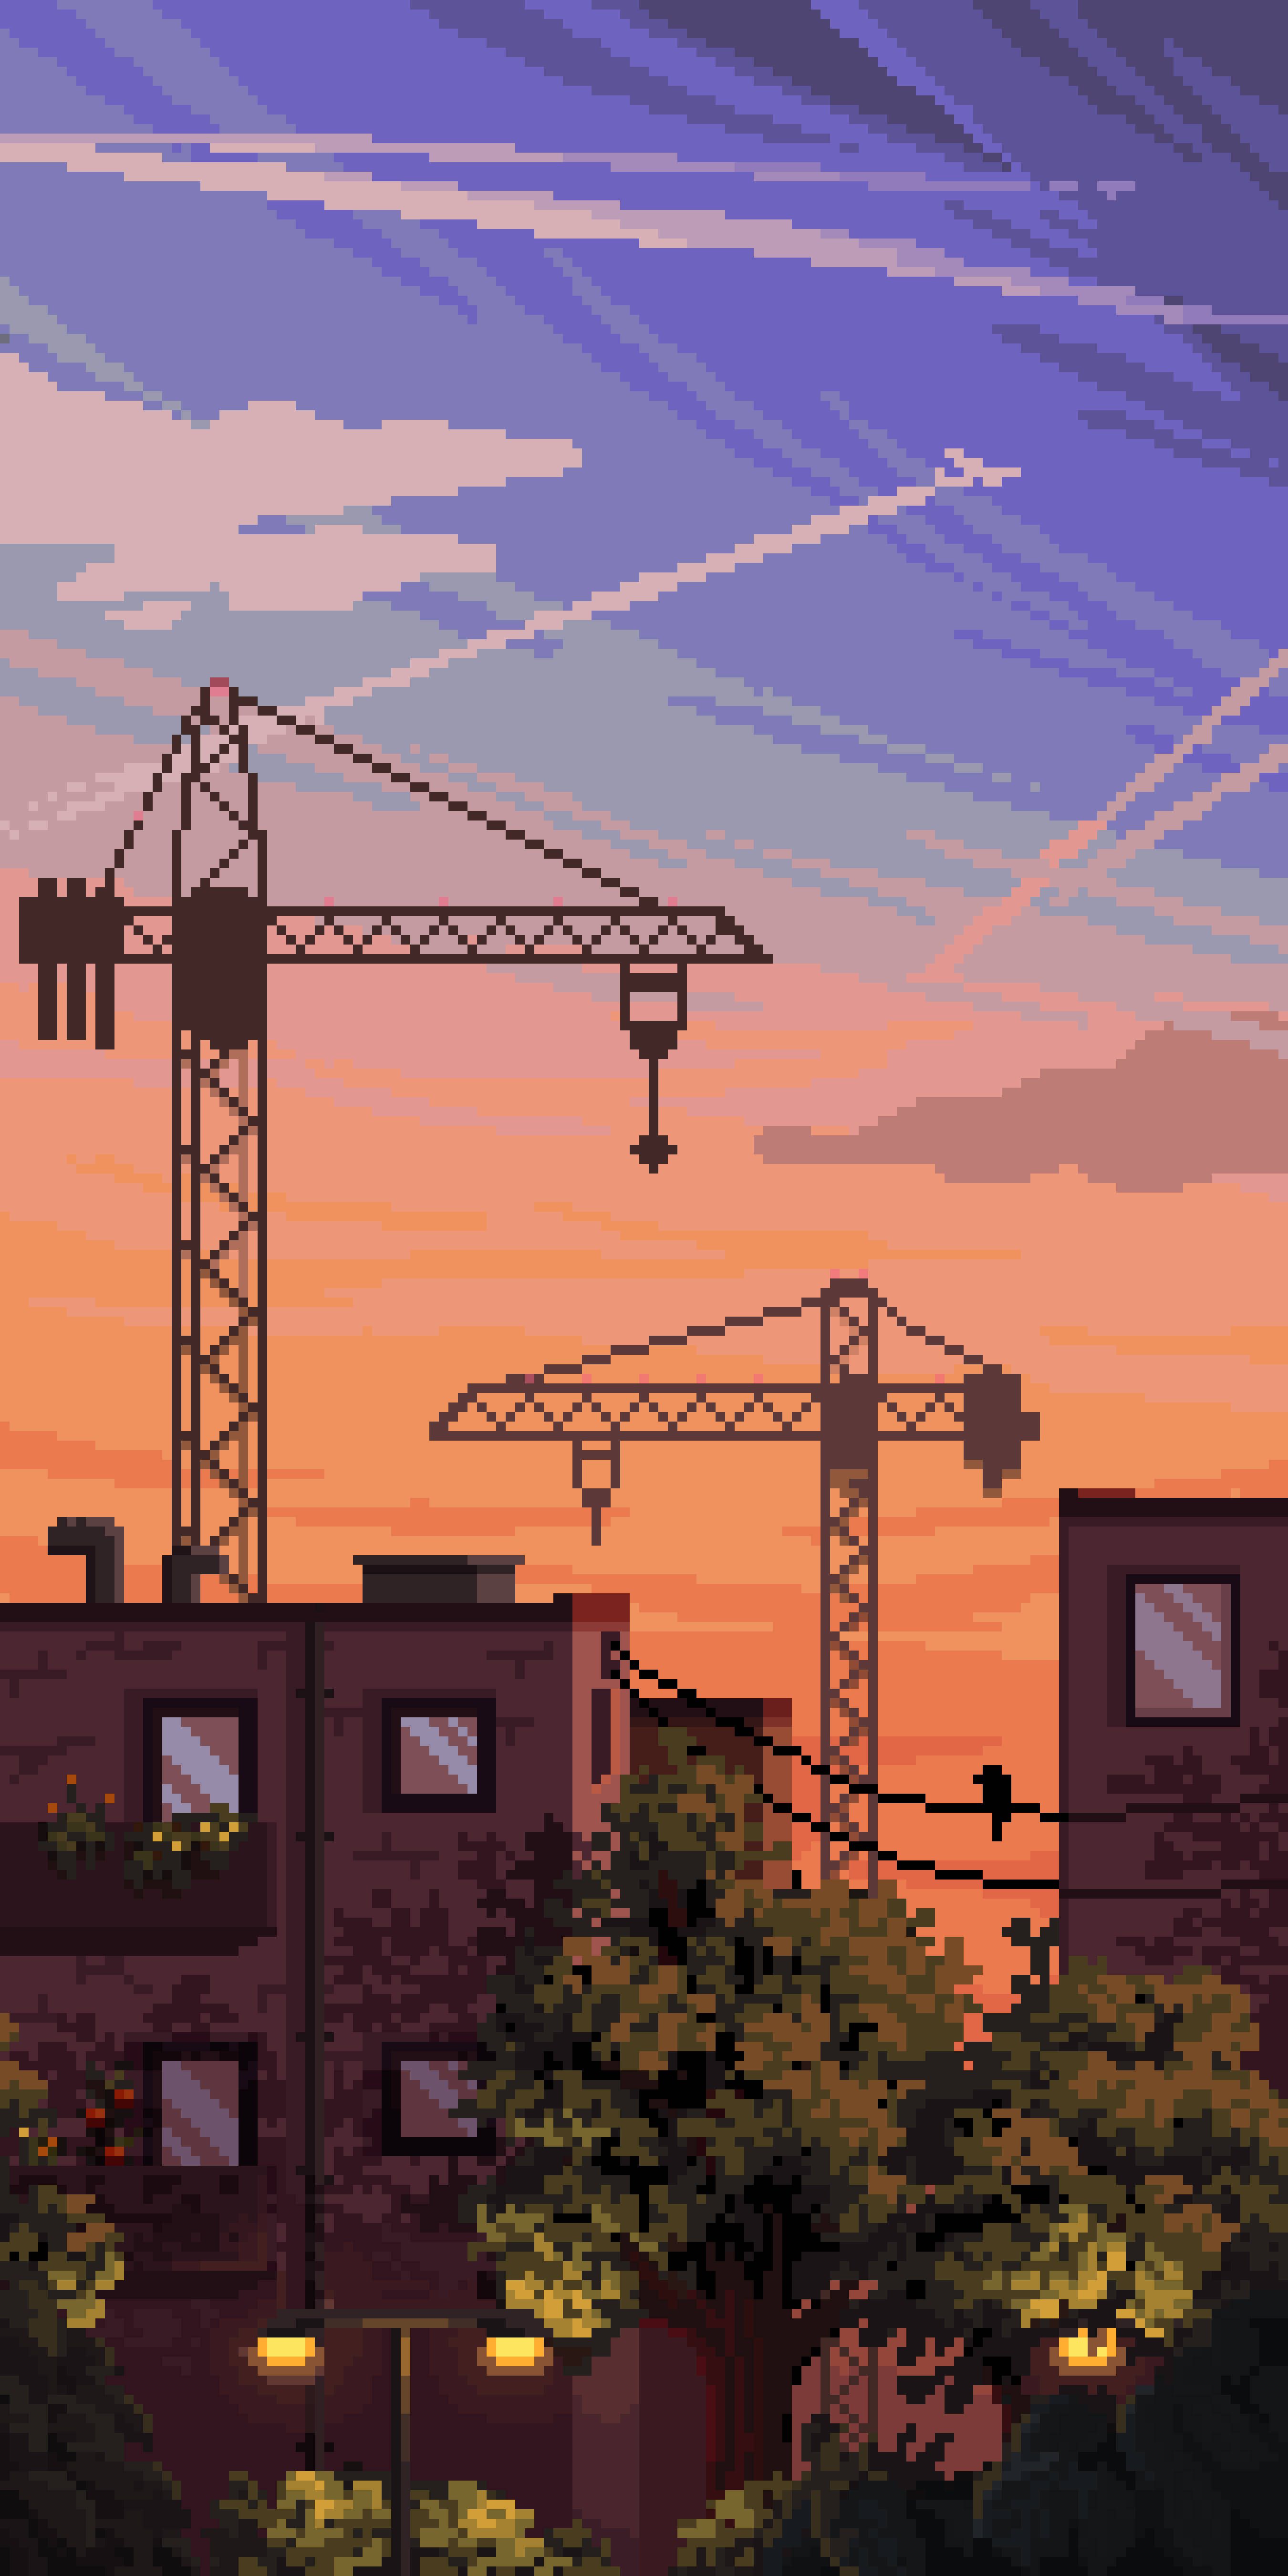 Download Buildings And Tower Cranes In Aesthetic Pixel Art Wallpaper